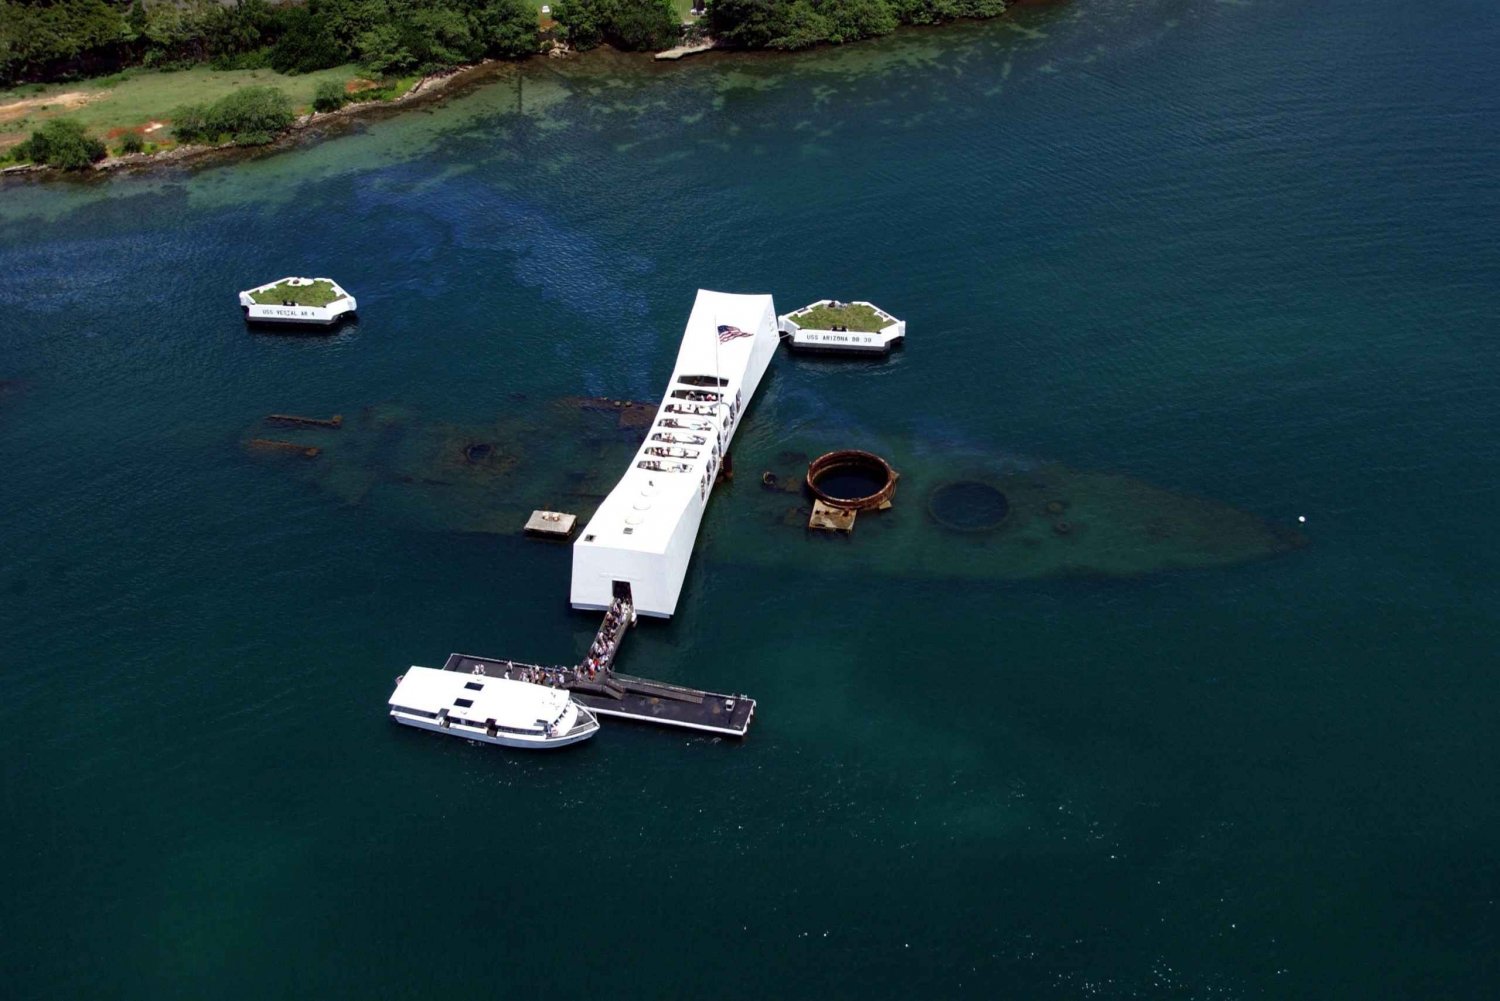 Prywatny pomnik Pearl Harbor USS Arizona